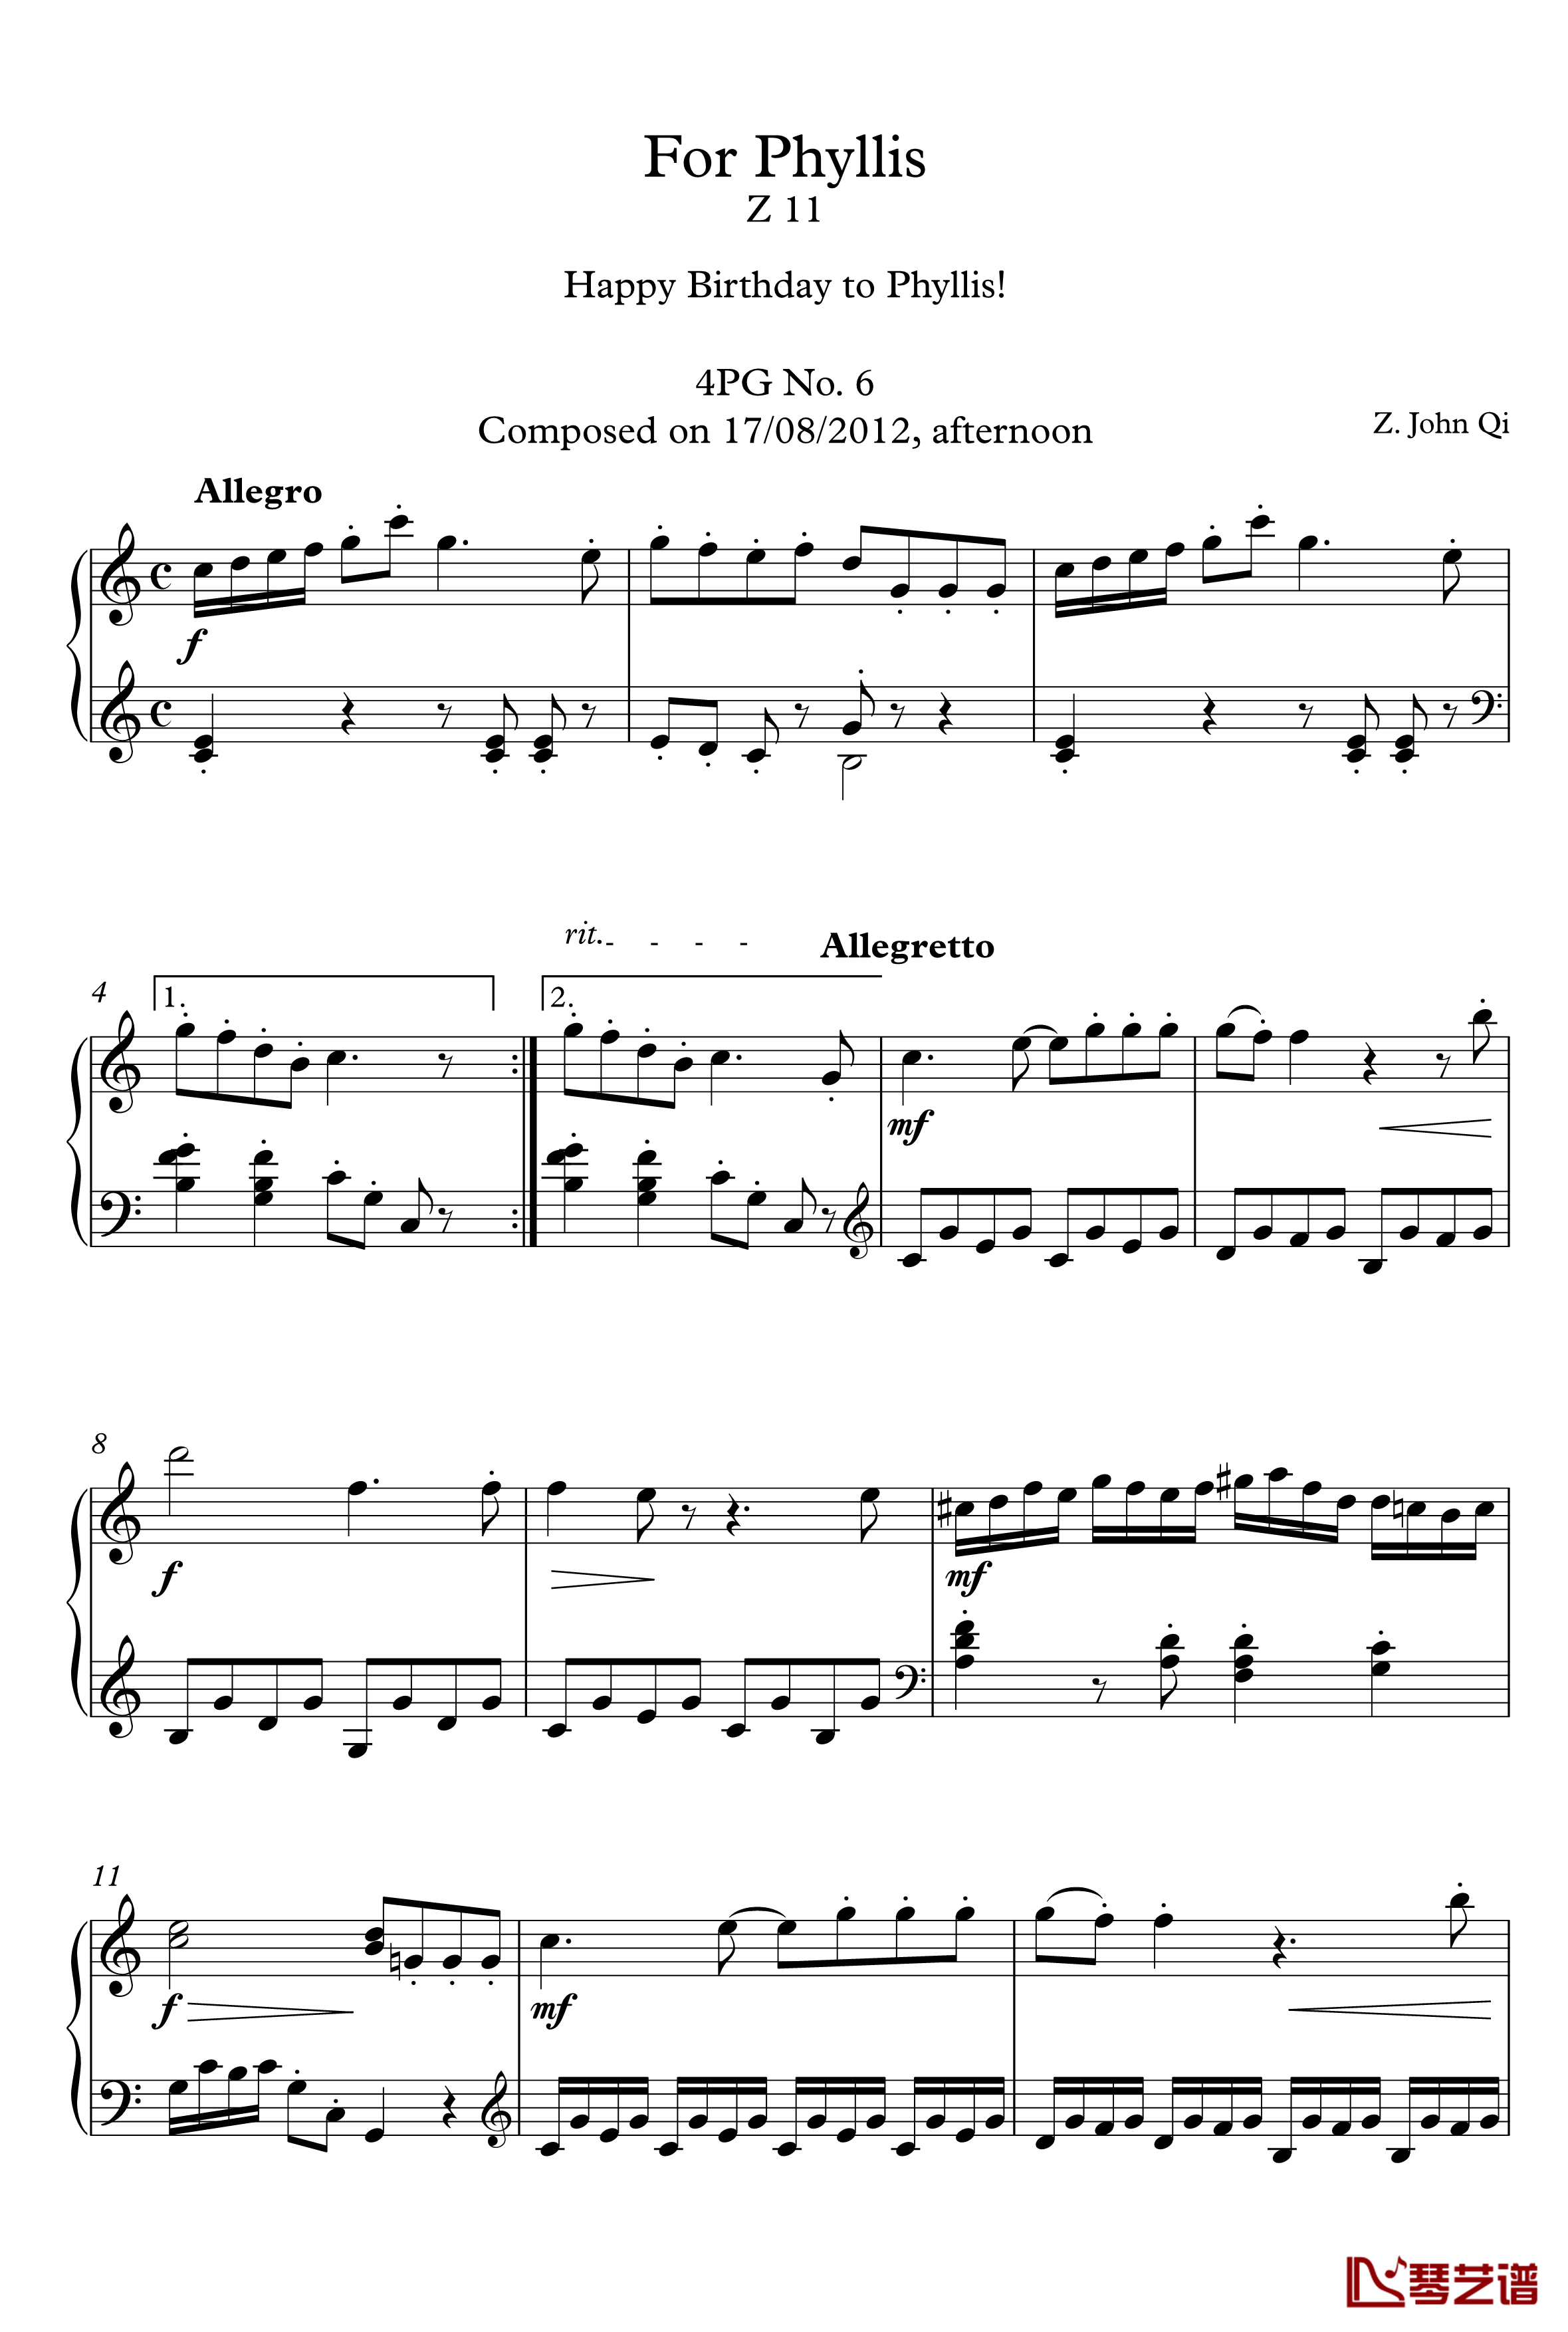 For Phyllis钢琴谱-4PG No. 6-漆政-Z111